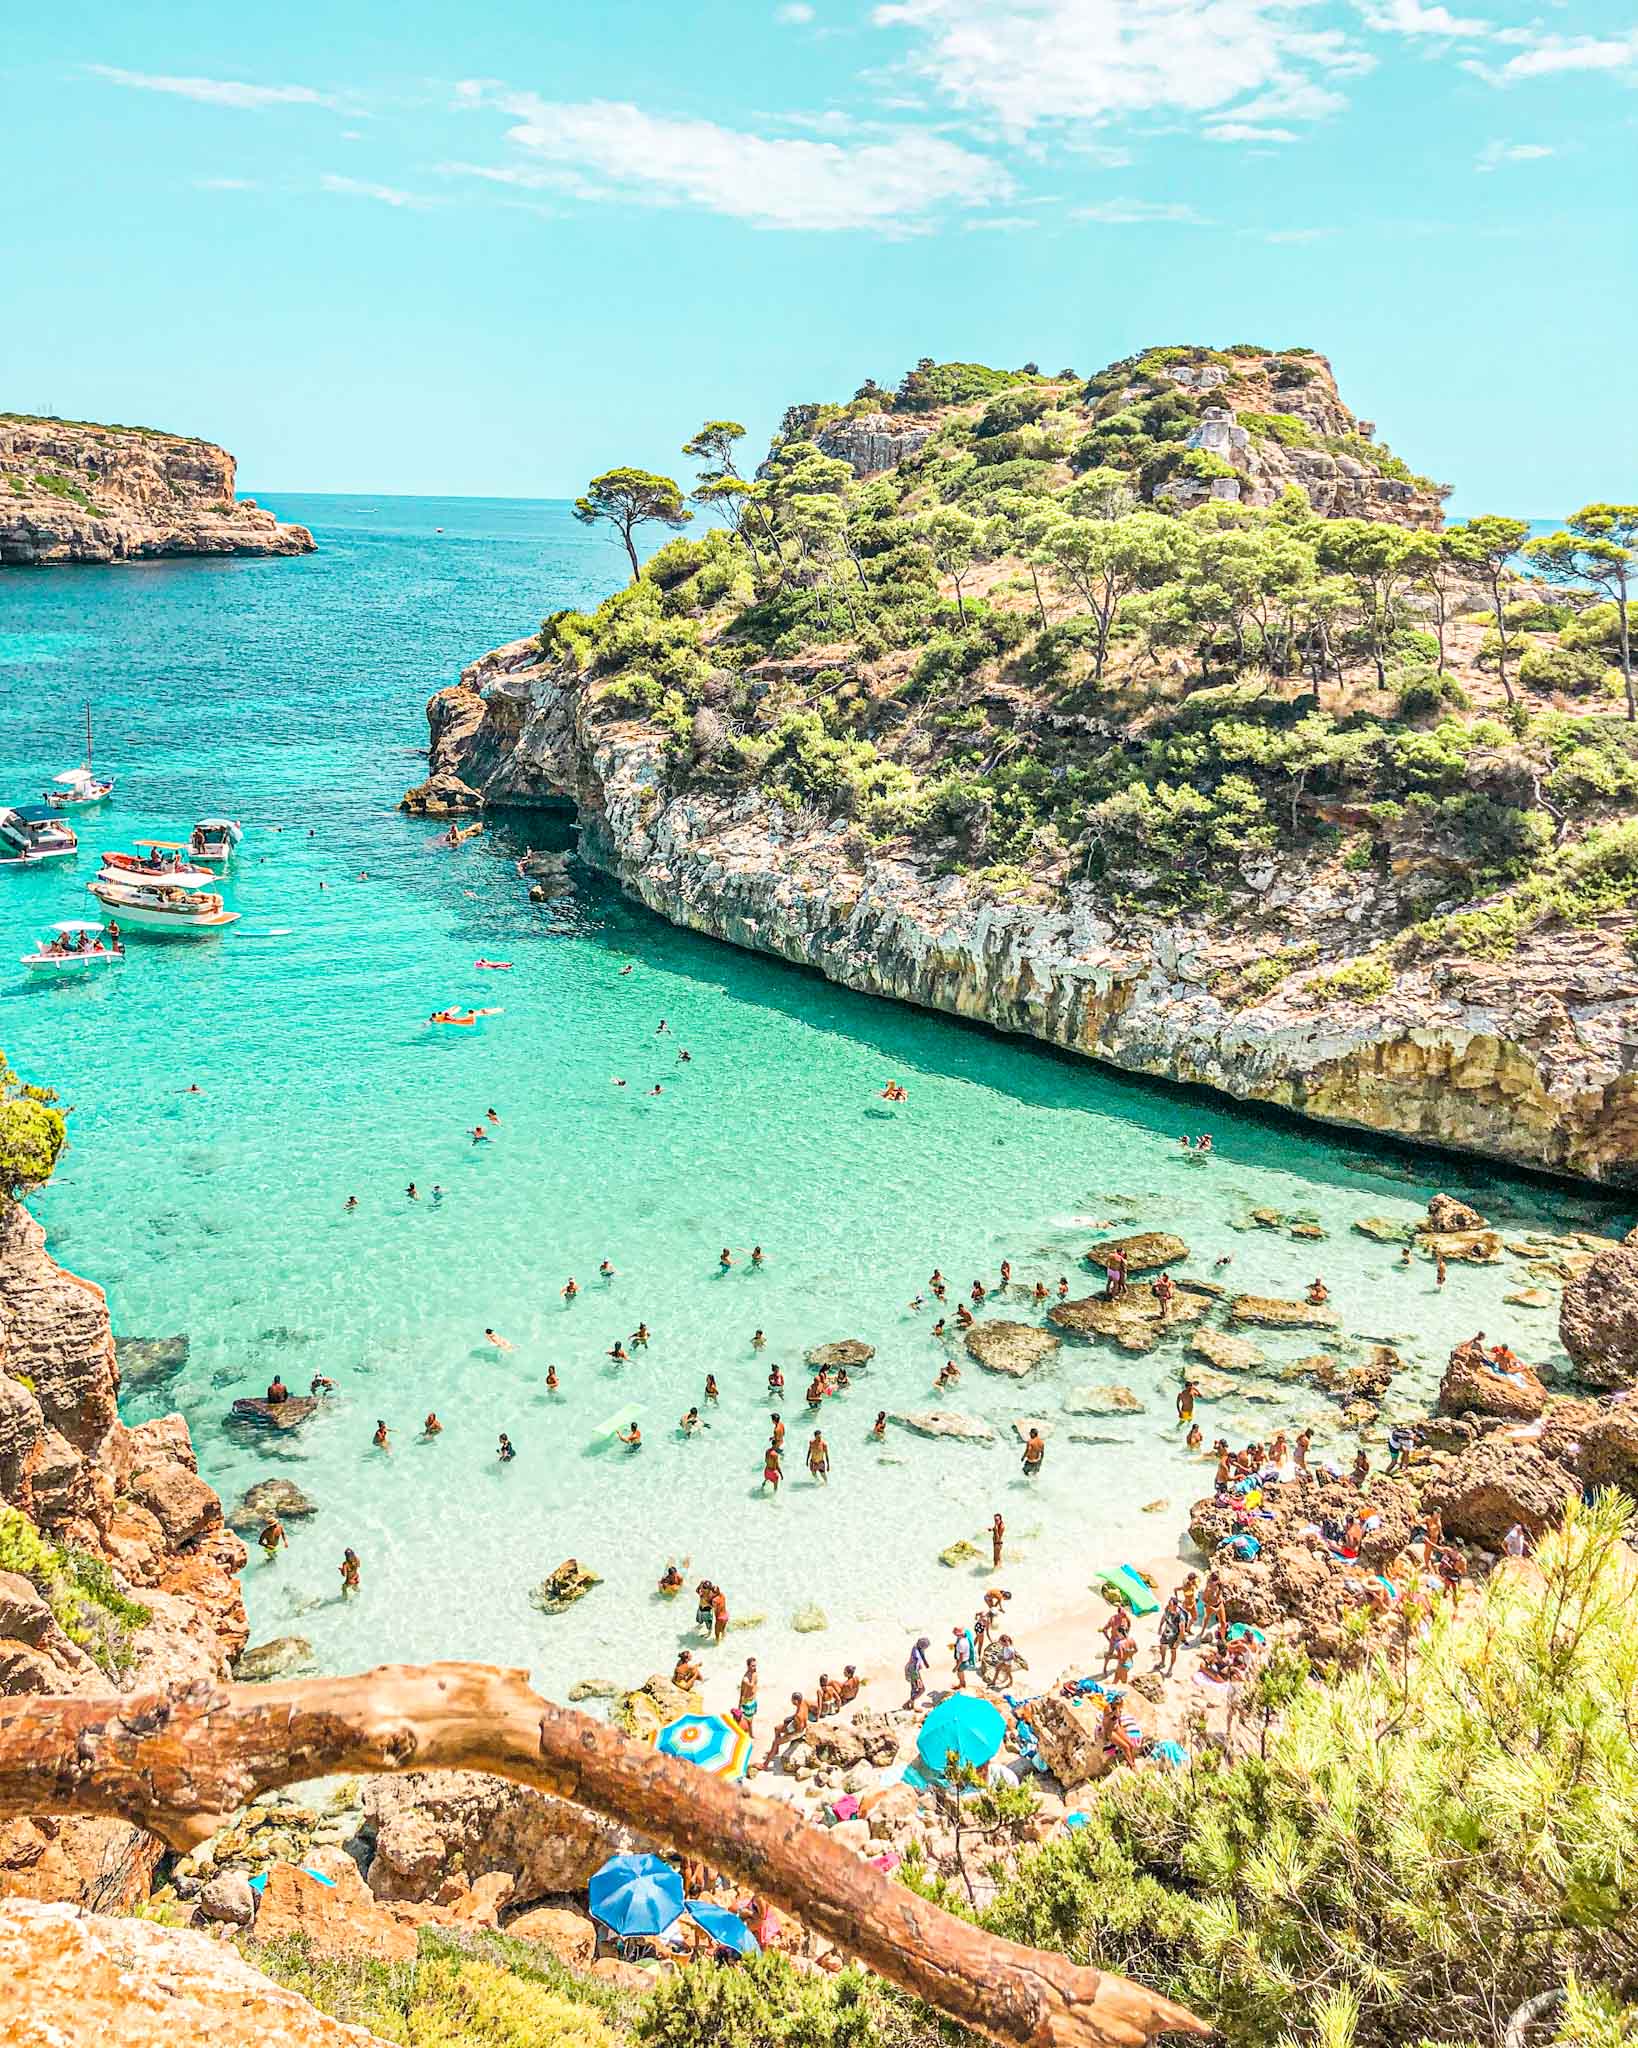 Must-see places: Calo des Moro beach in Mallorca